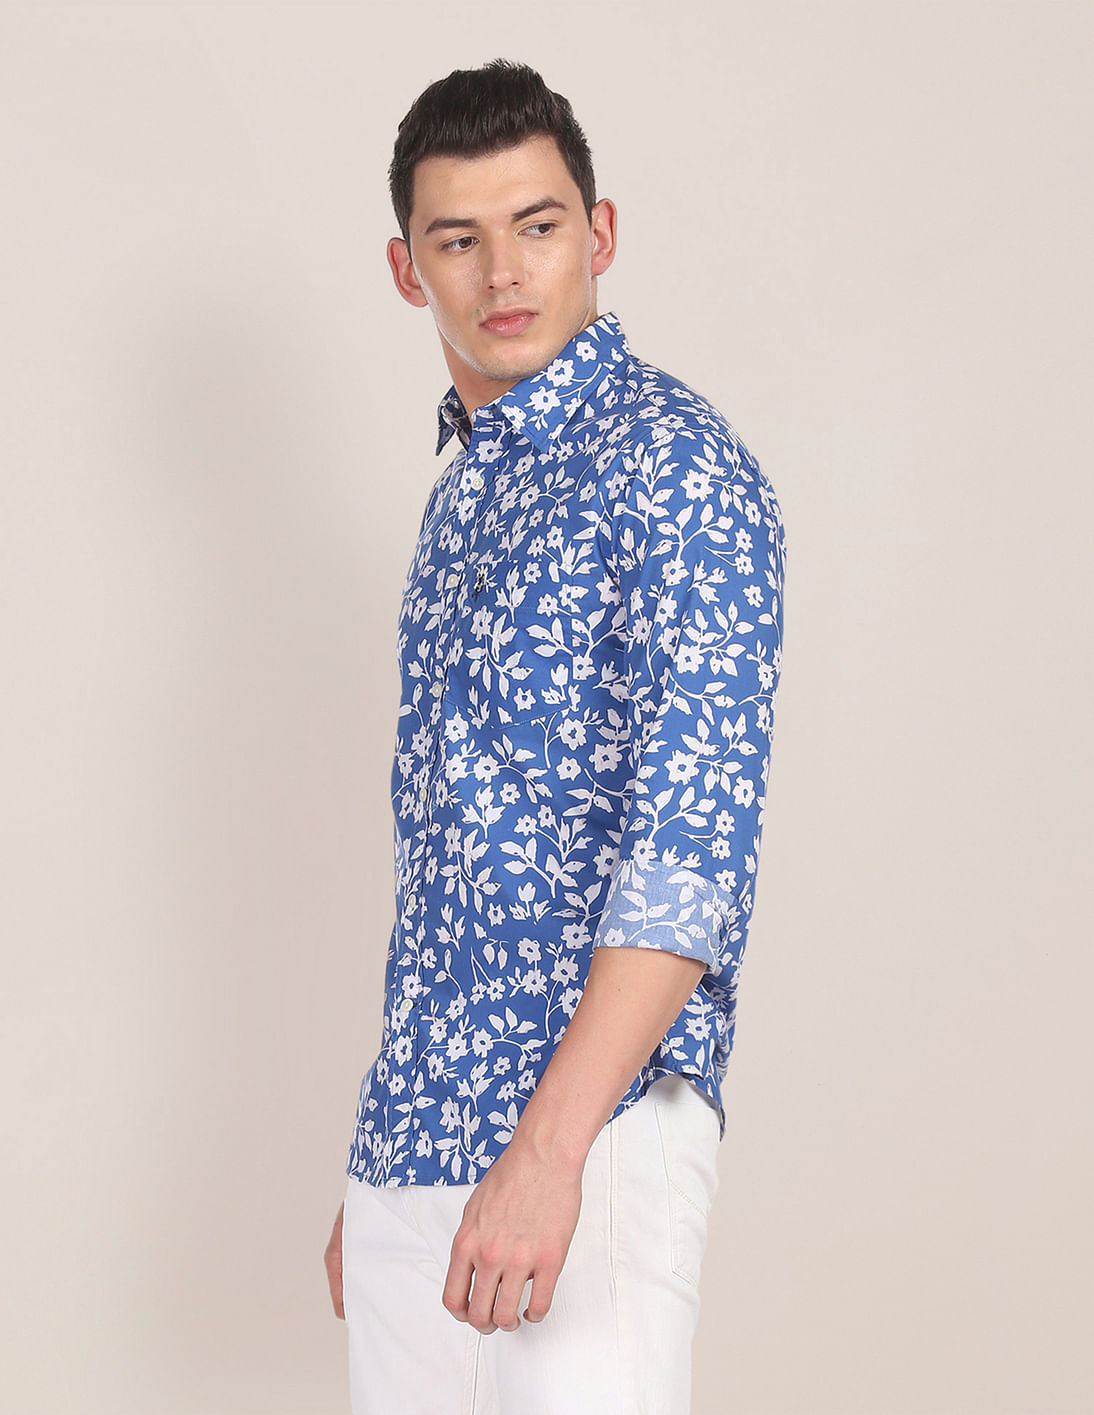 Polo Ralph Lauren Men's Blue Floral Cotton Polo Shirt, Size Small  710823805001 - Jomashop